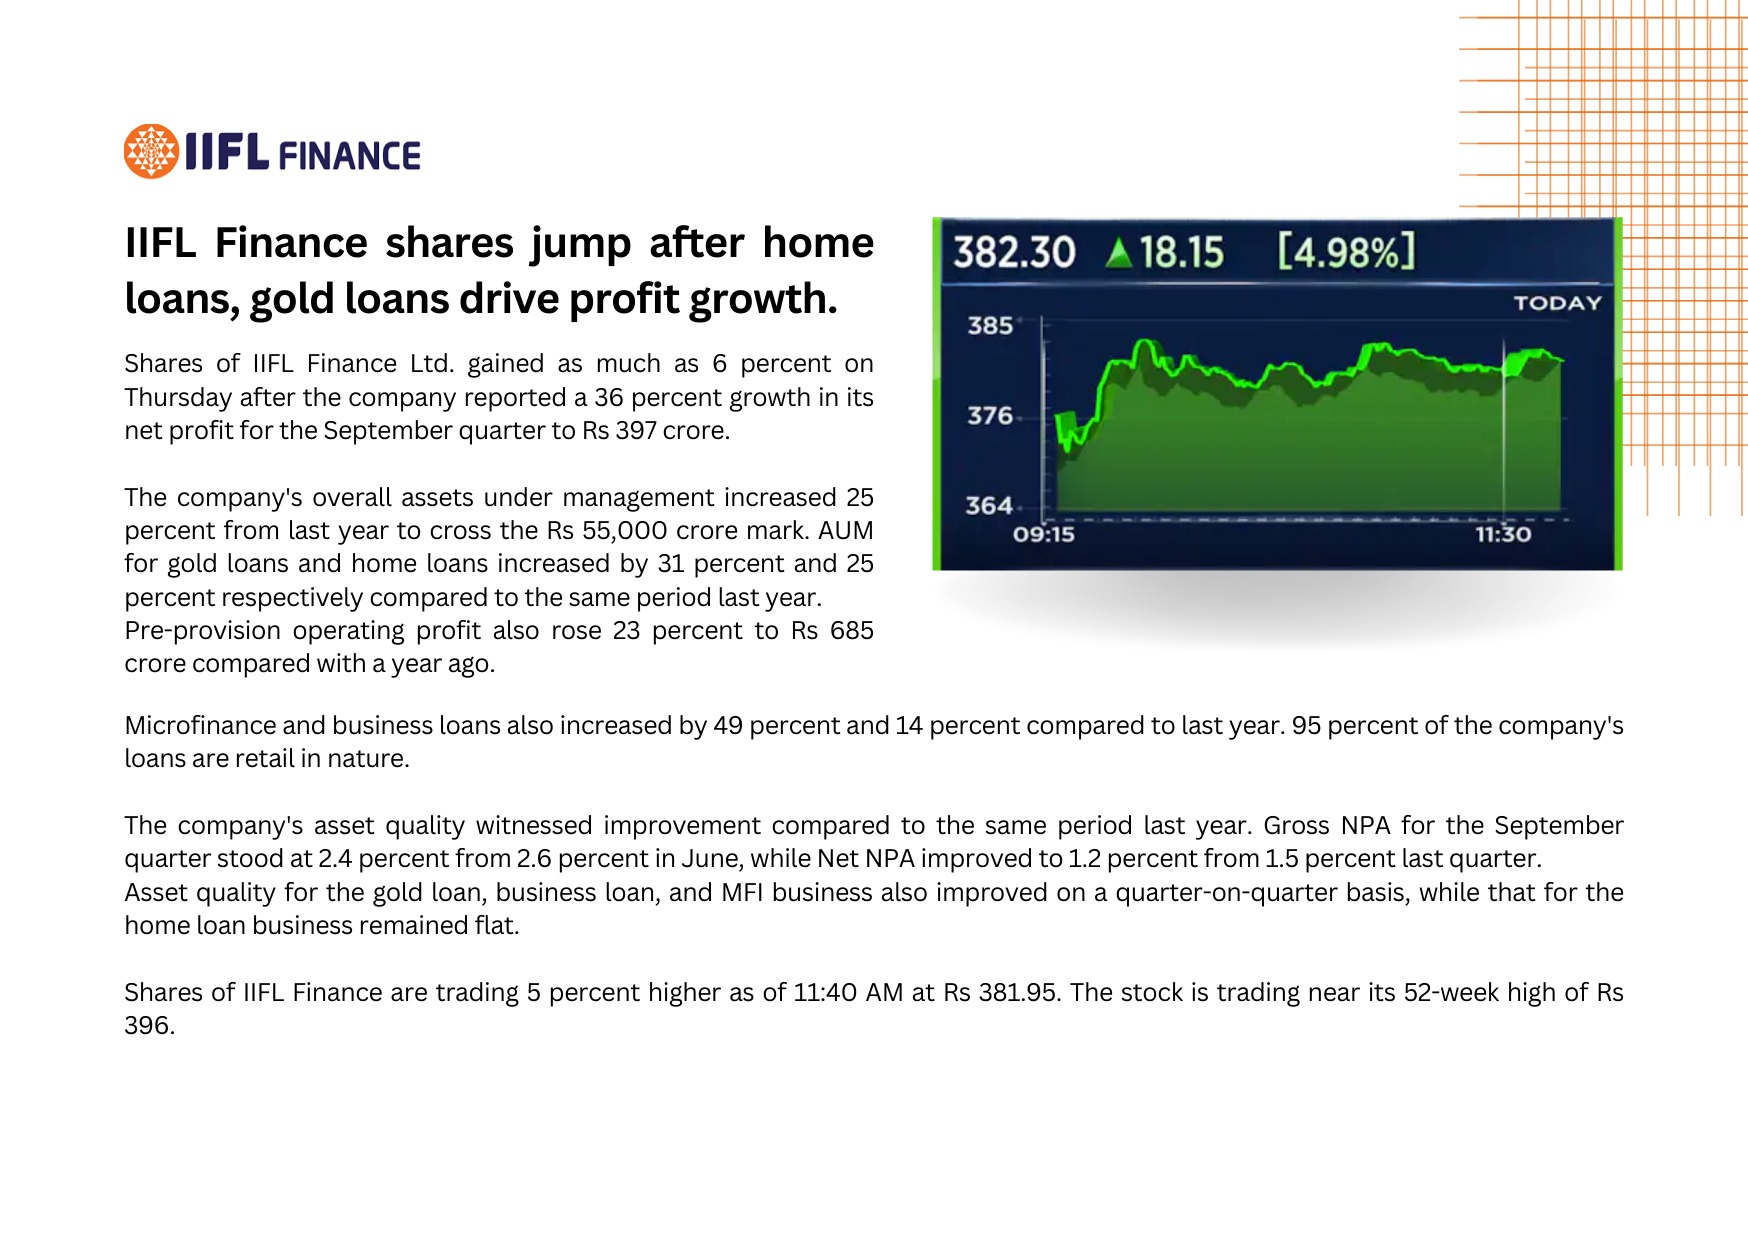 IIFL Finance details regarding jump in the shares.